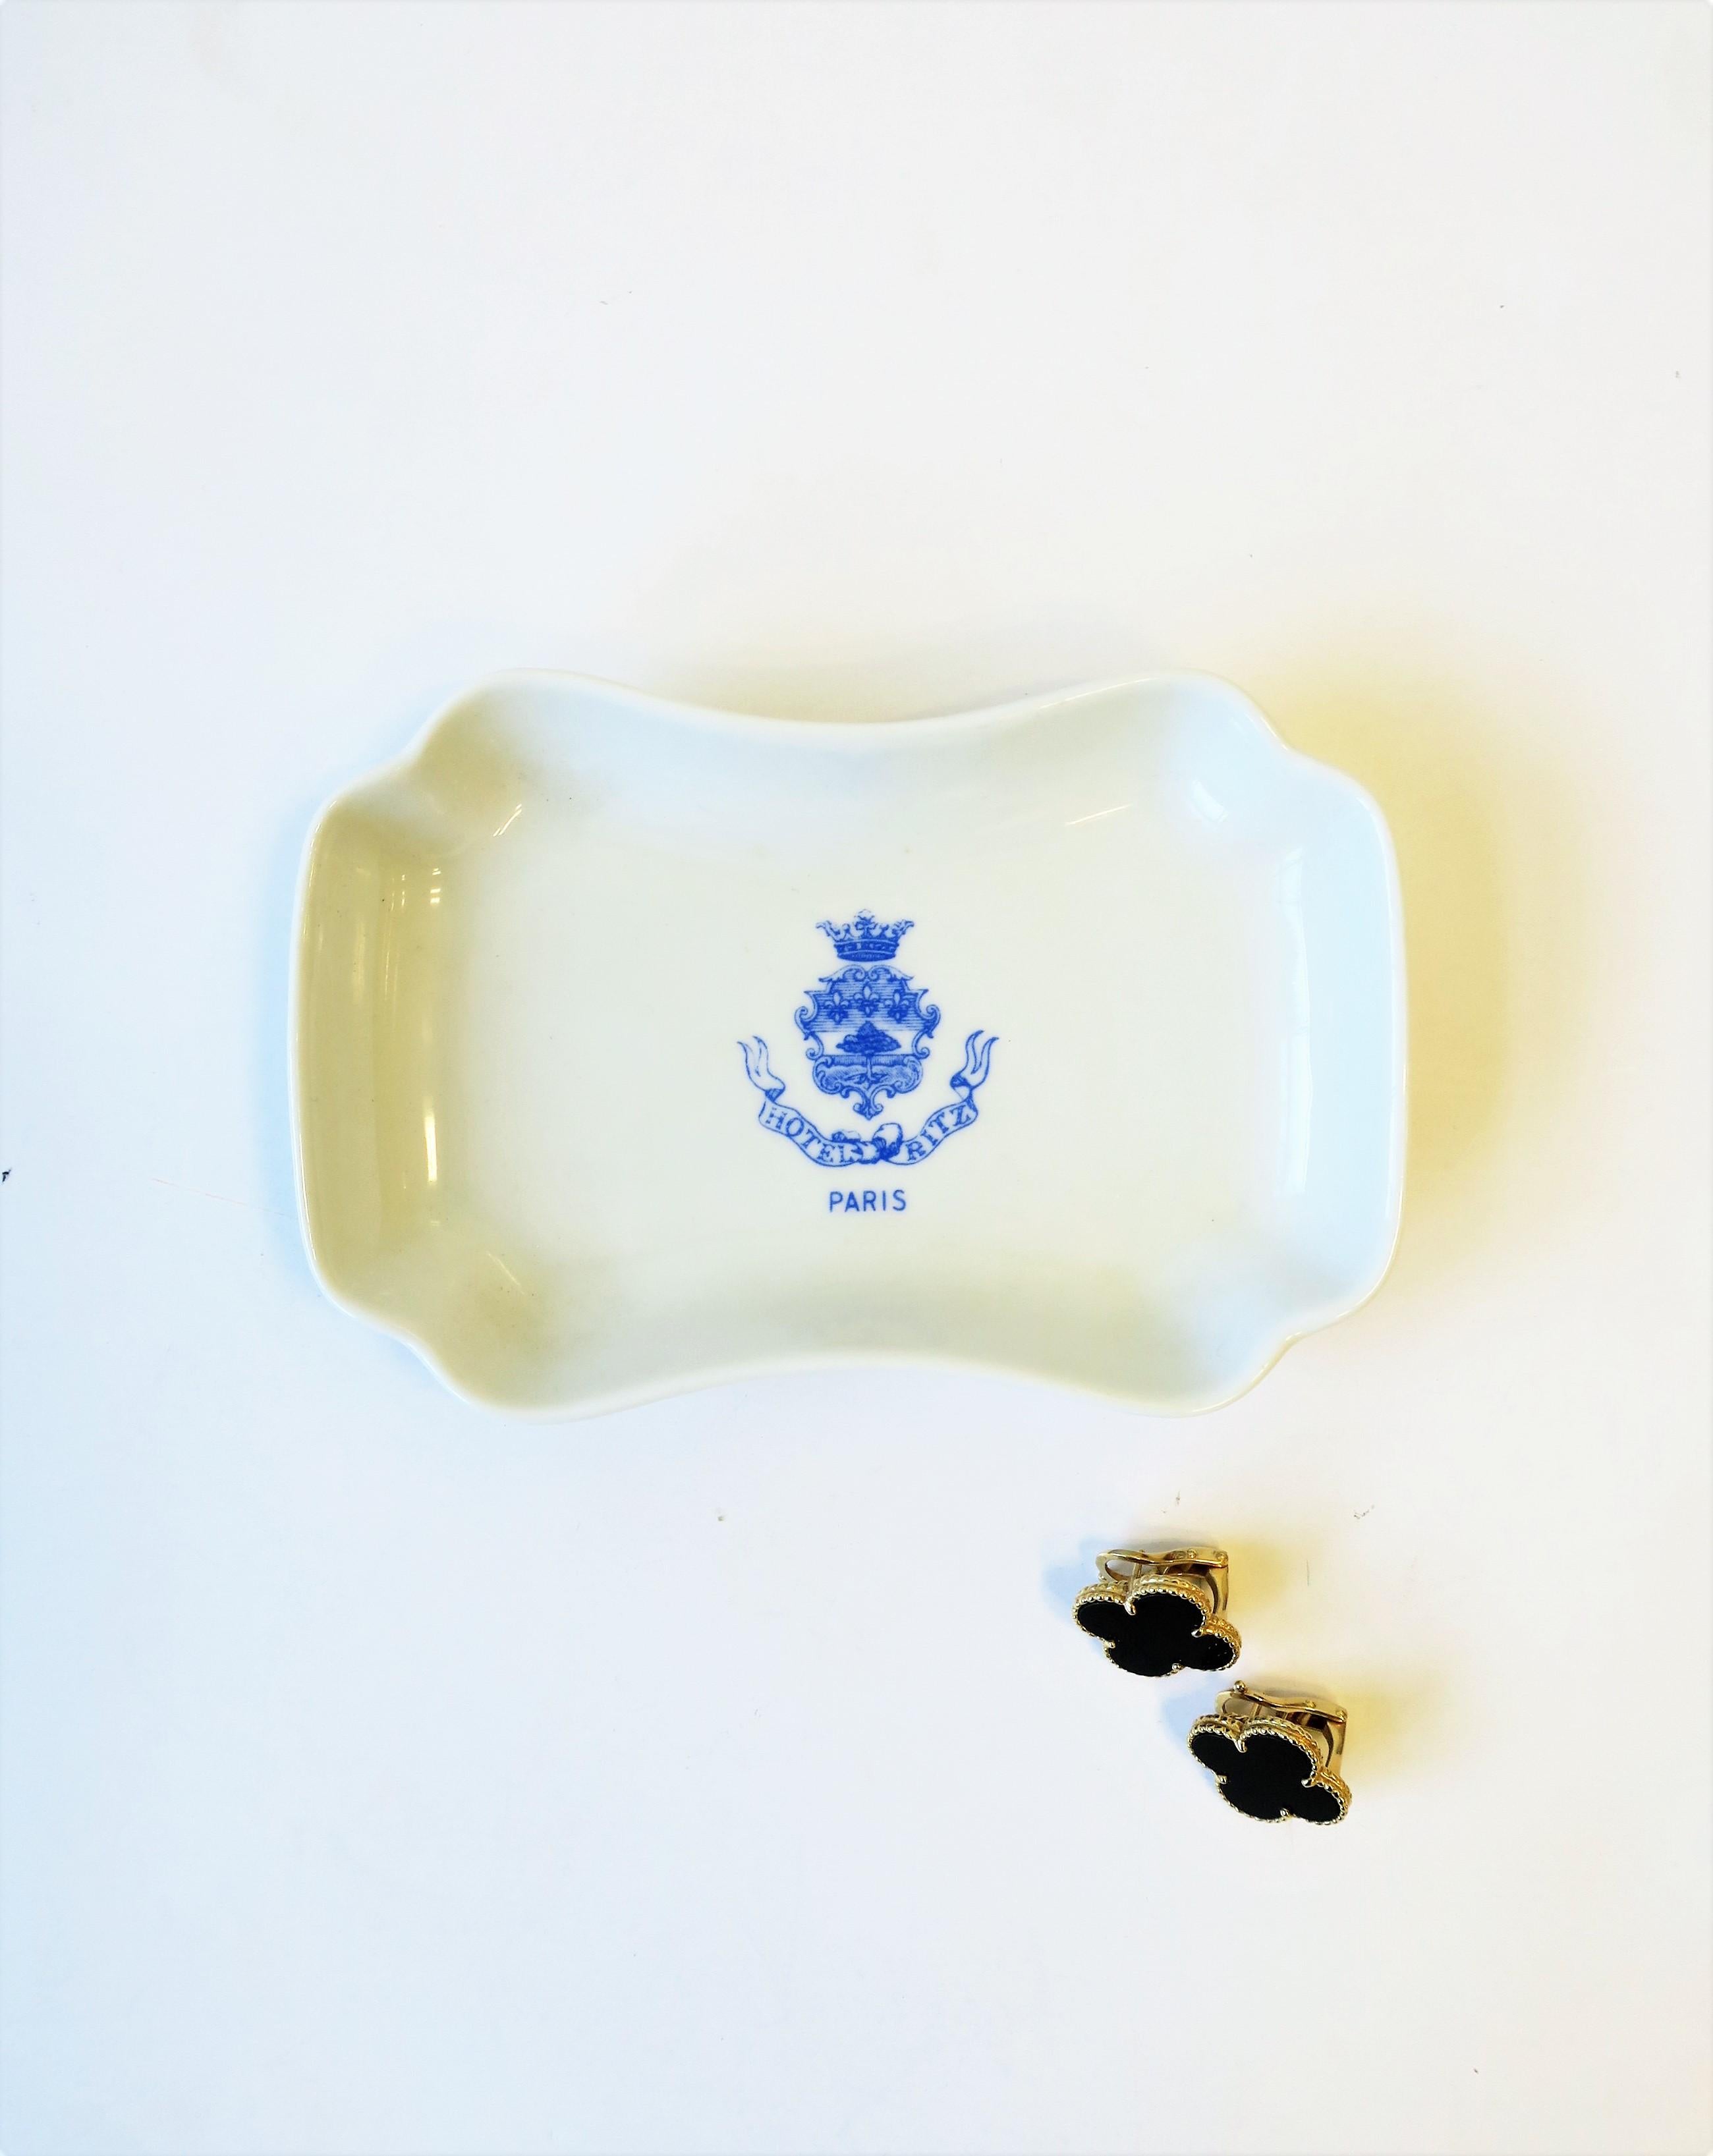 Glazed Hotel Ritz Paris Blue and White Porcelain Jewelry Dish, France